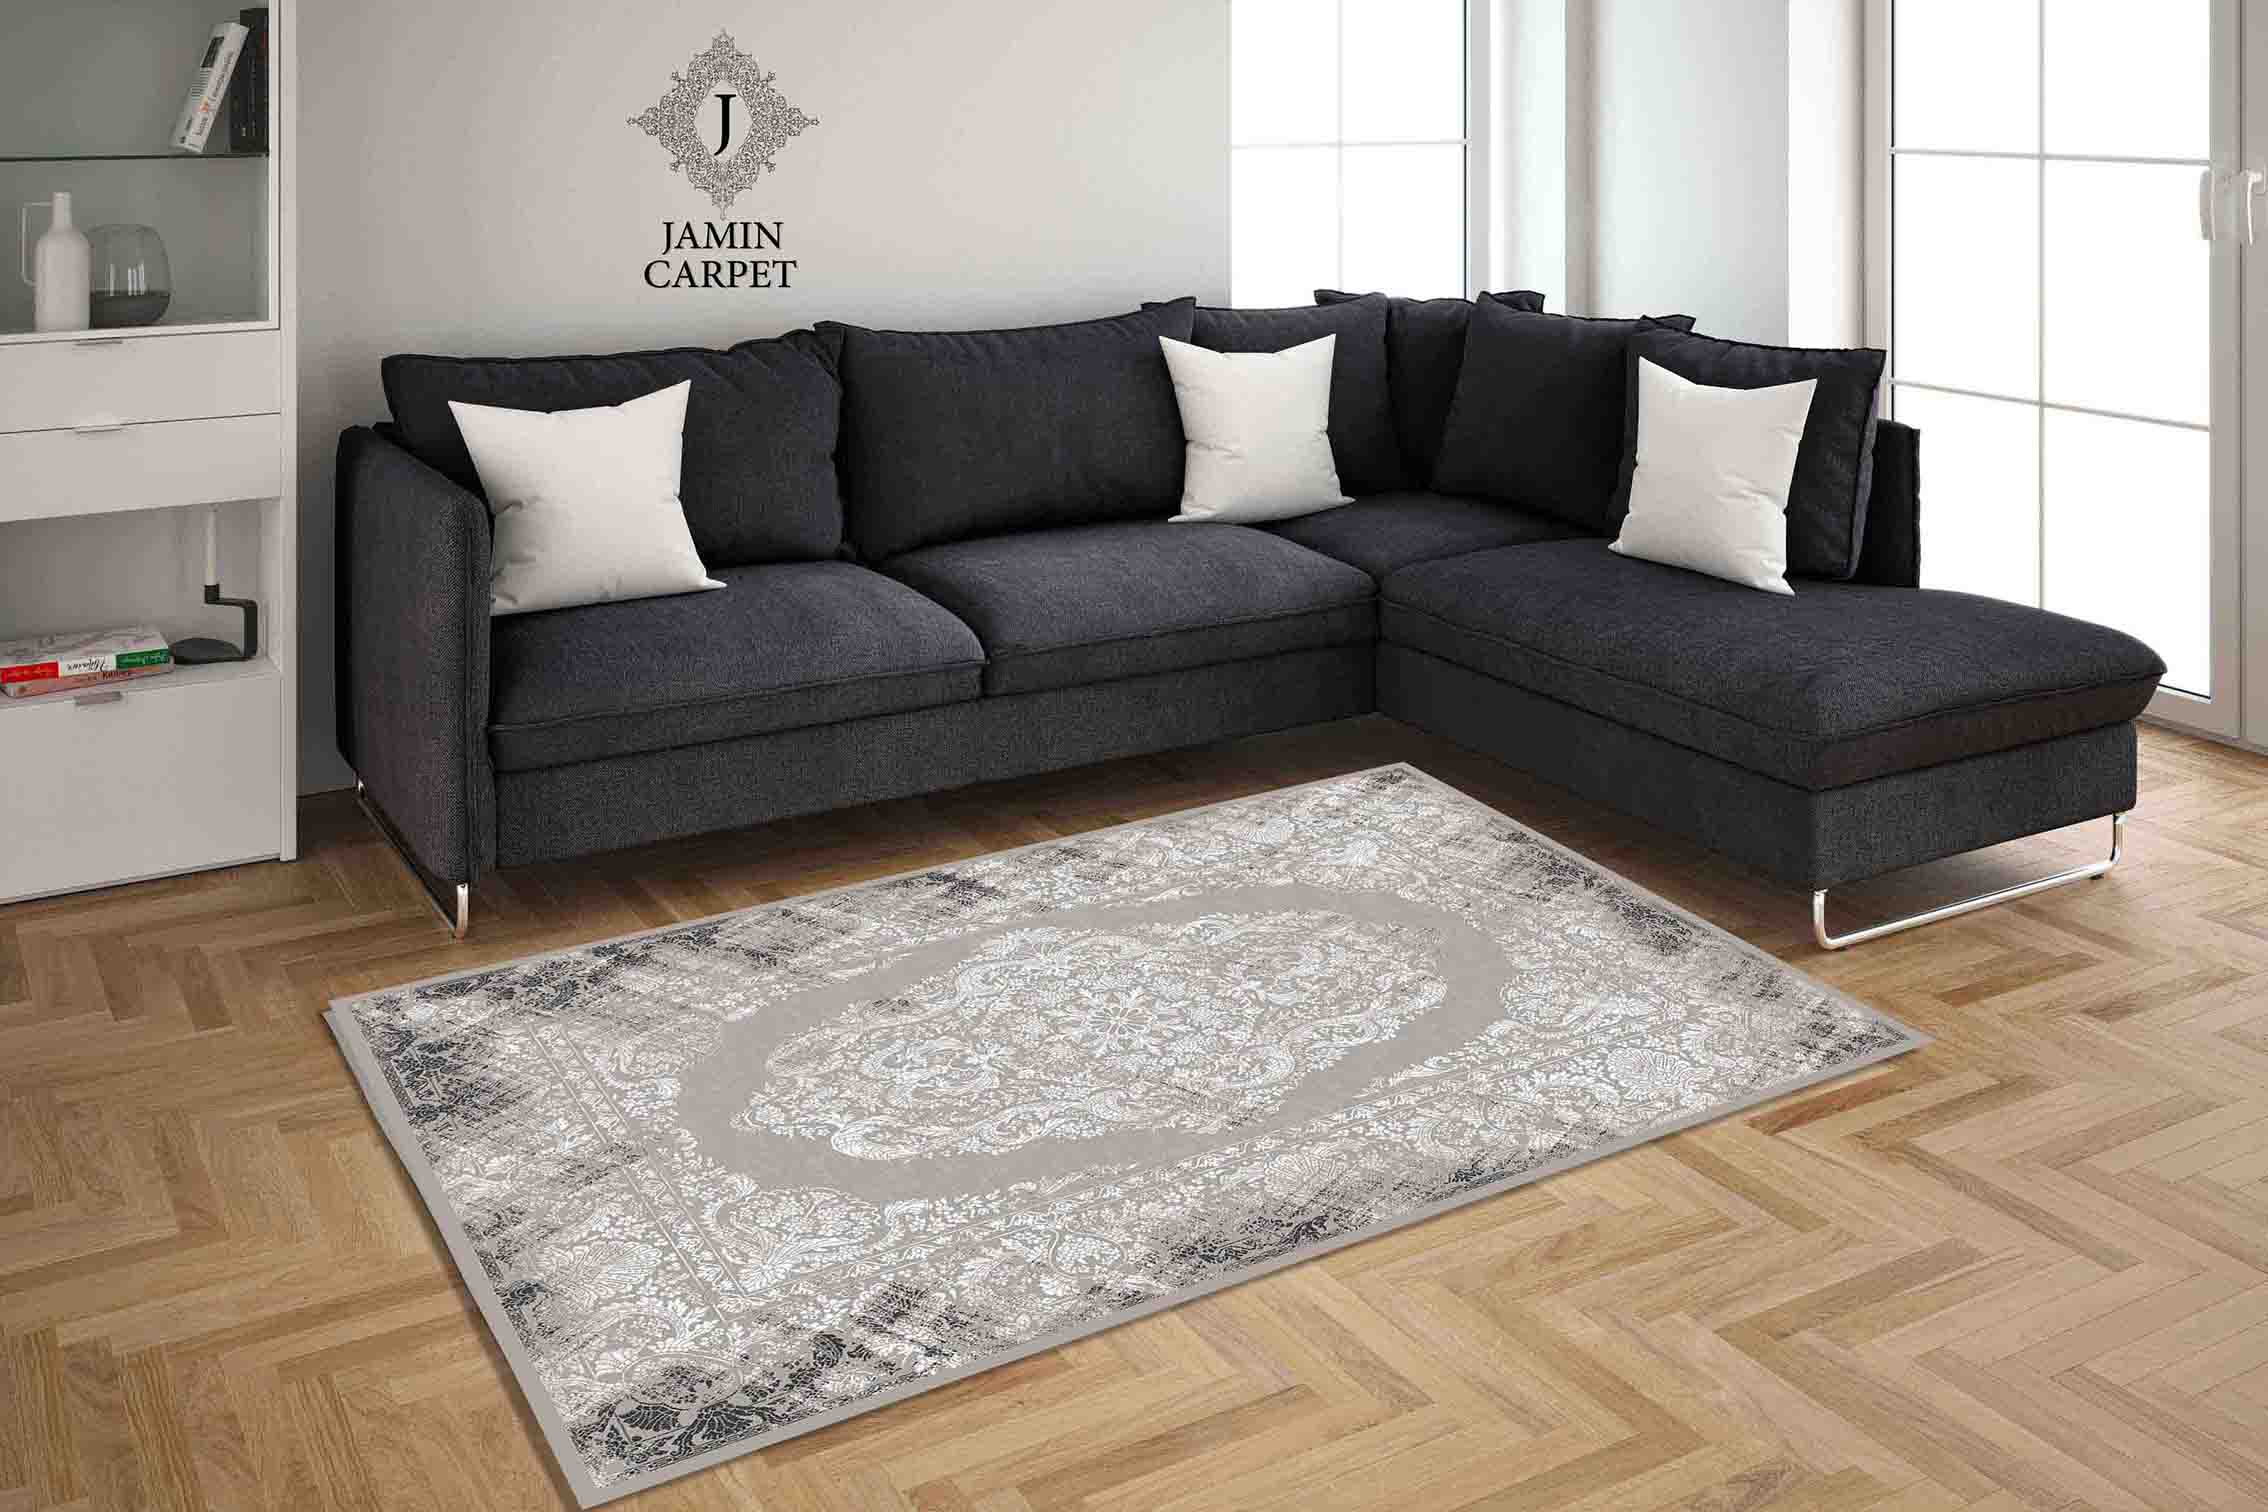 Fantasy carpet, code 254, comb 400, density 1800, all acrylic